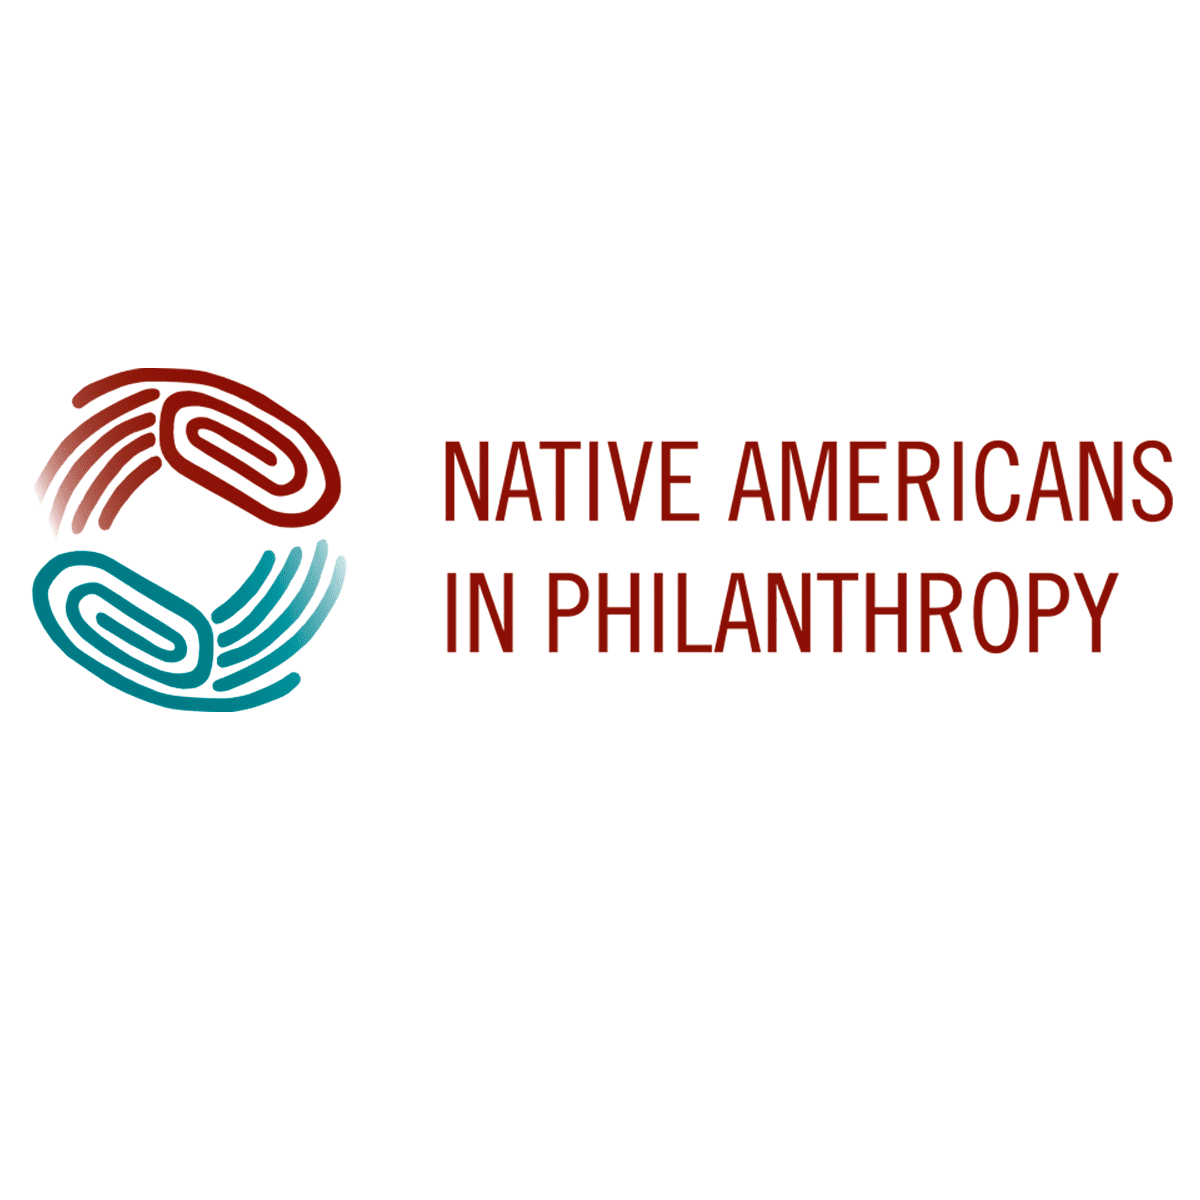 Native Americans in Philanthropy